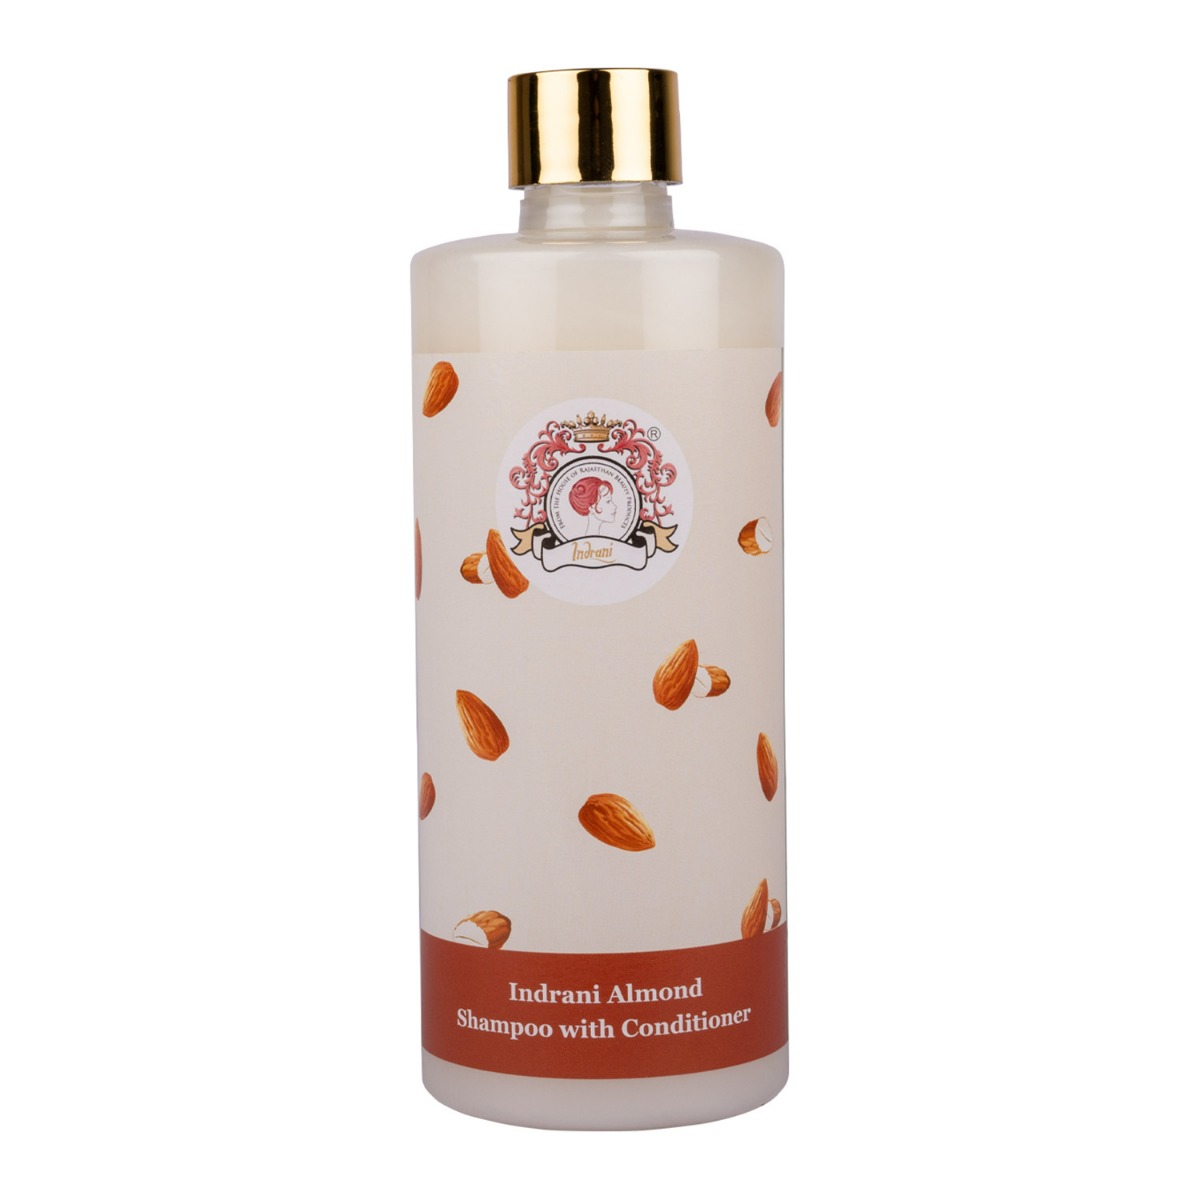 Indrani Almond Shampoo With Conditioner, 500ml